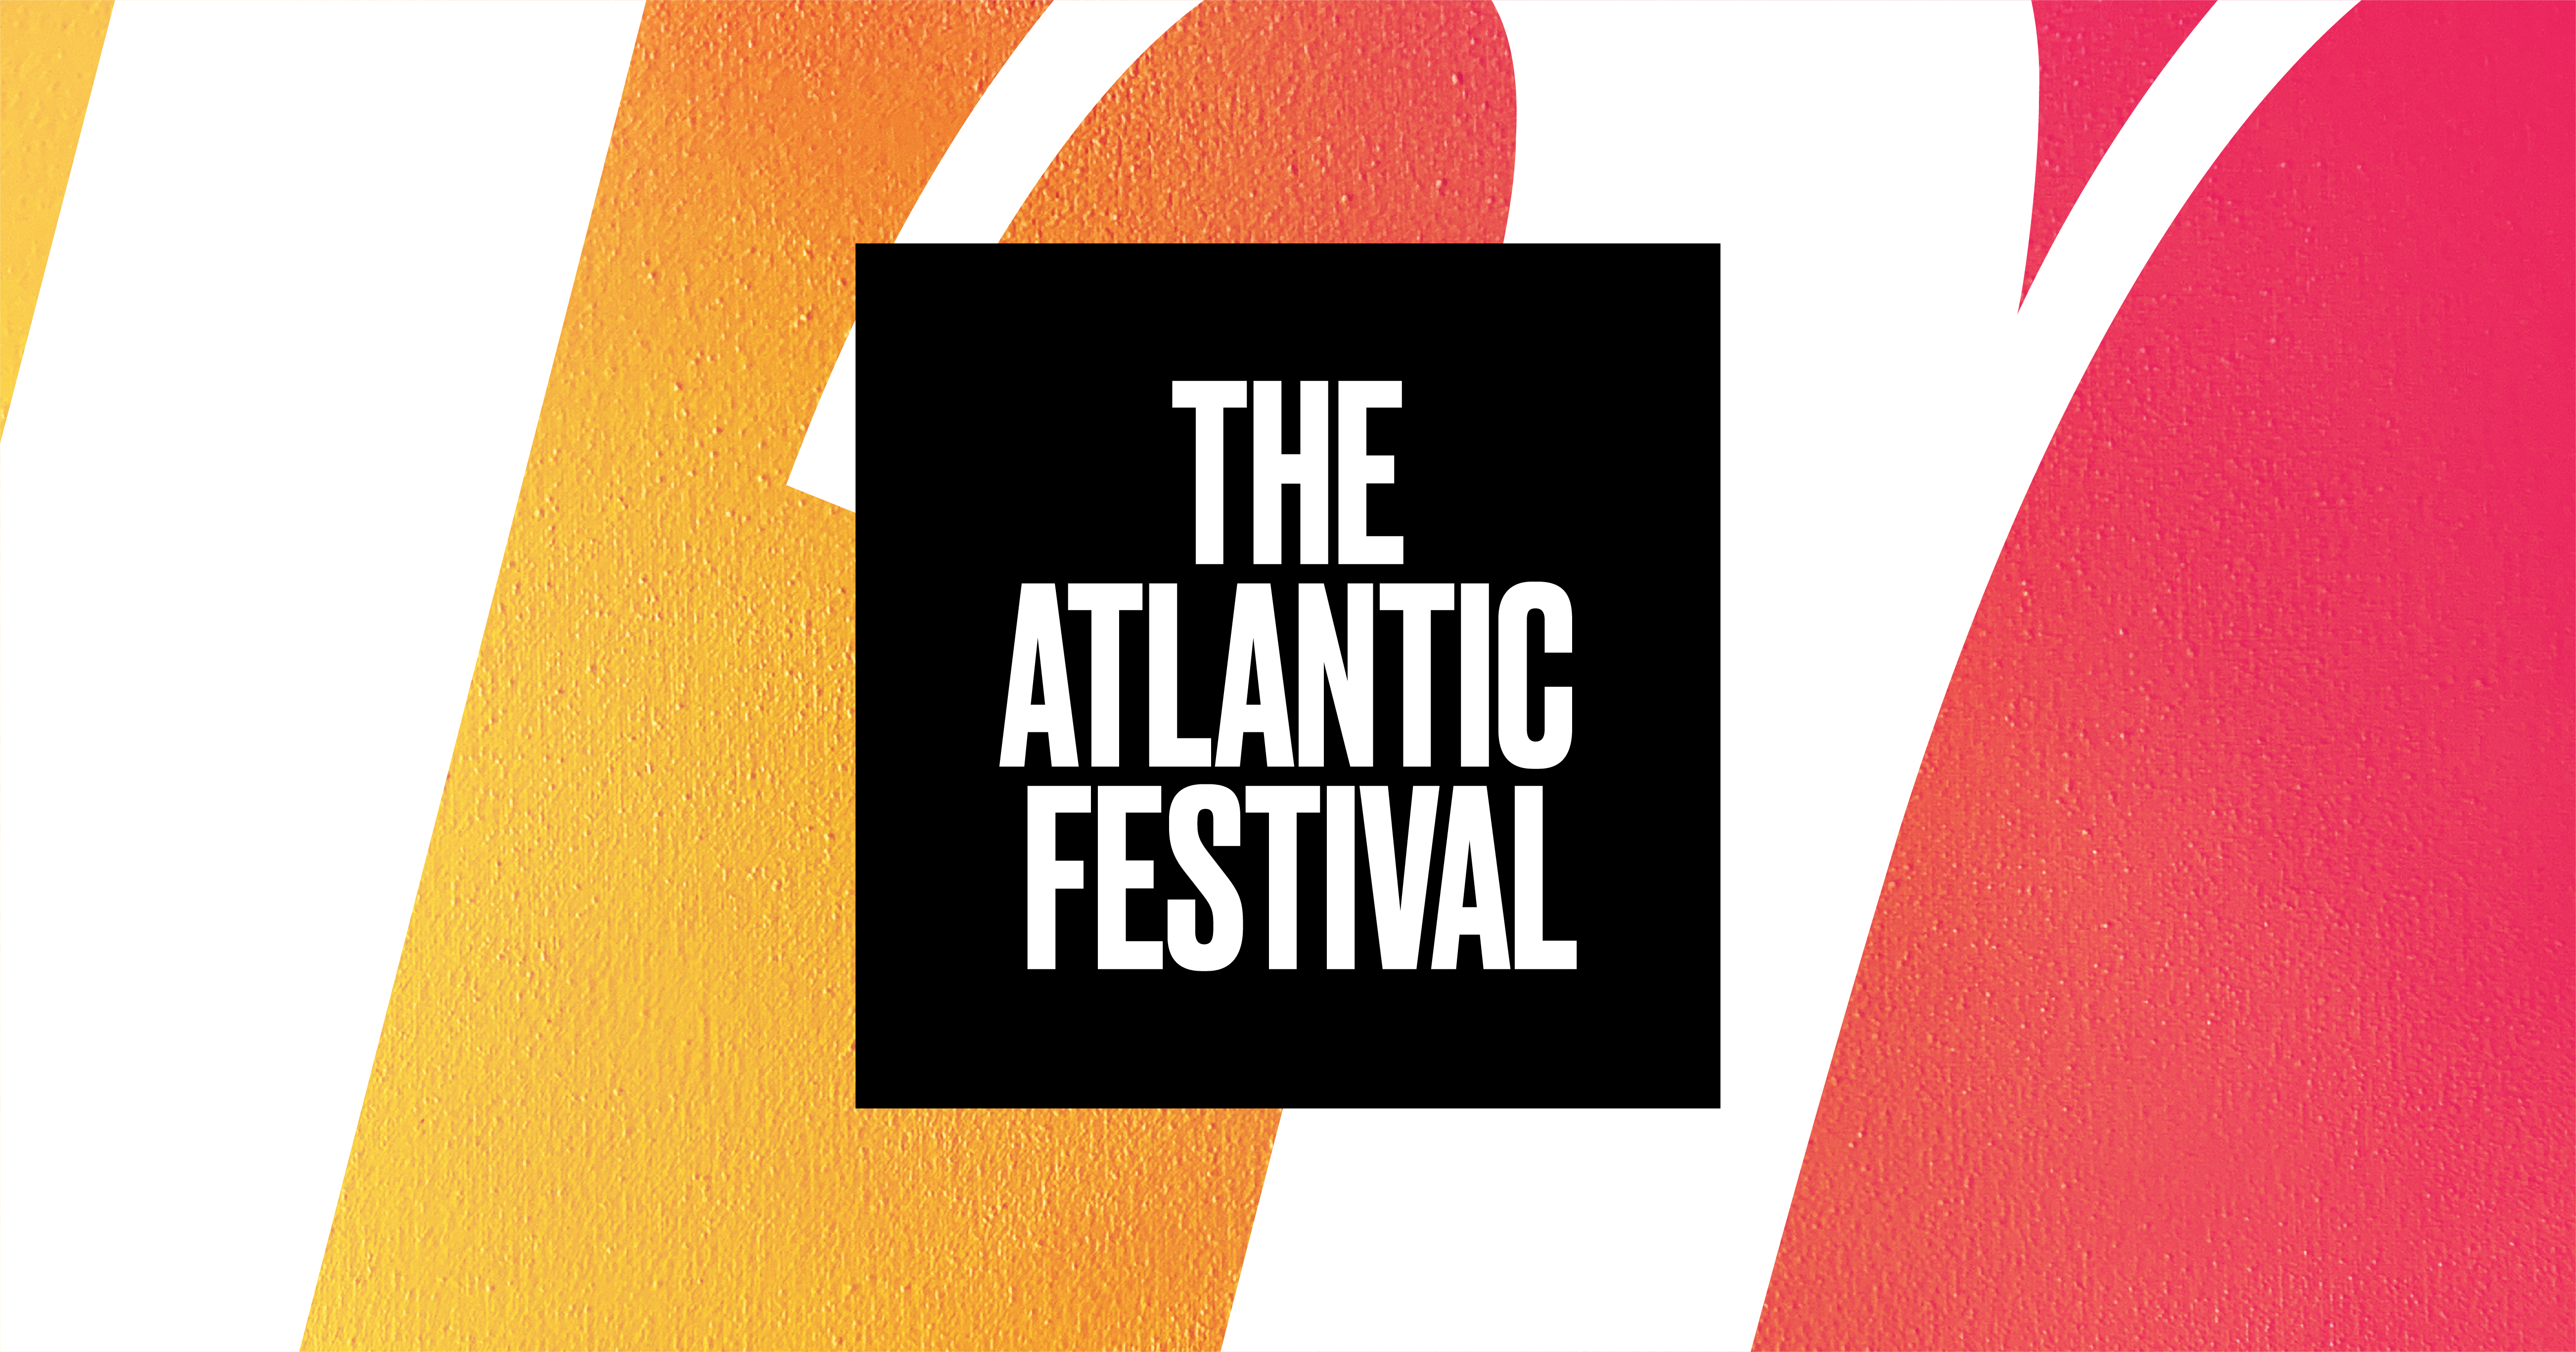 The Atlantic Festival 2019 The Atlantic